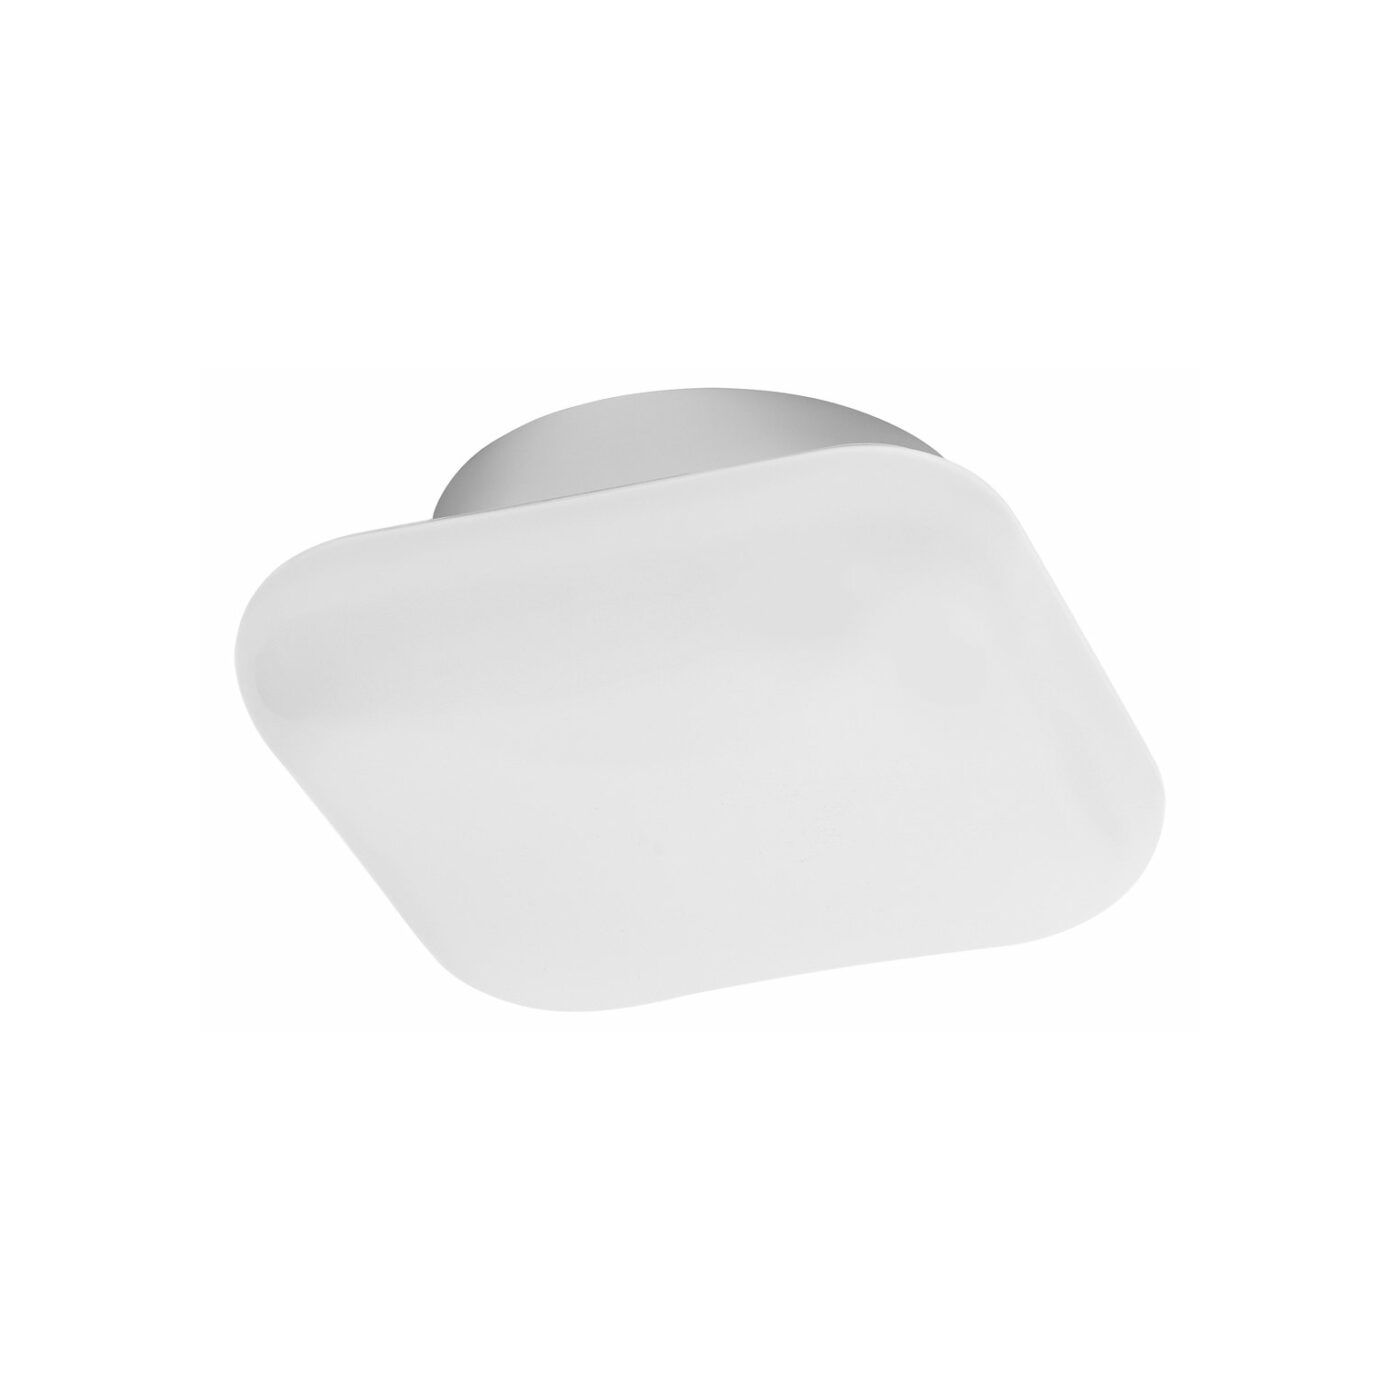 Orbis Aqua smart dimbare LED plafondlamp 20x20 wit